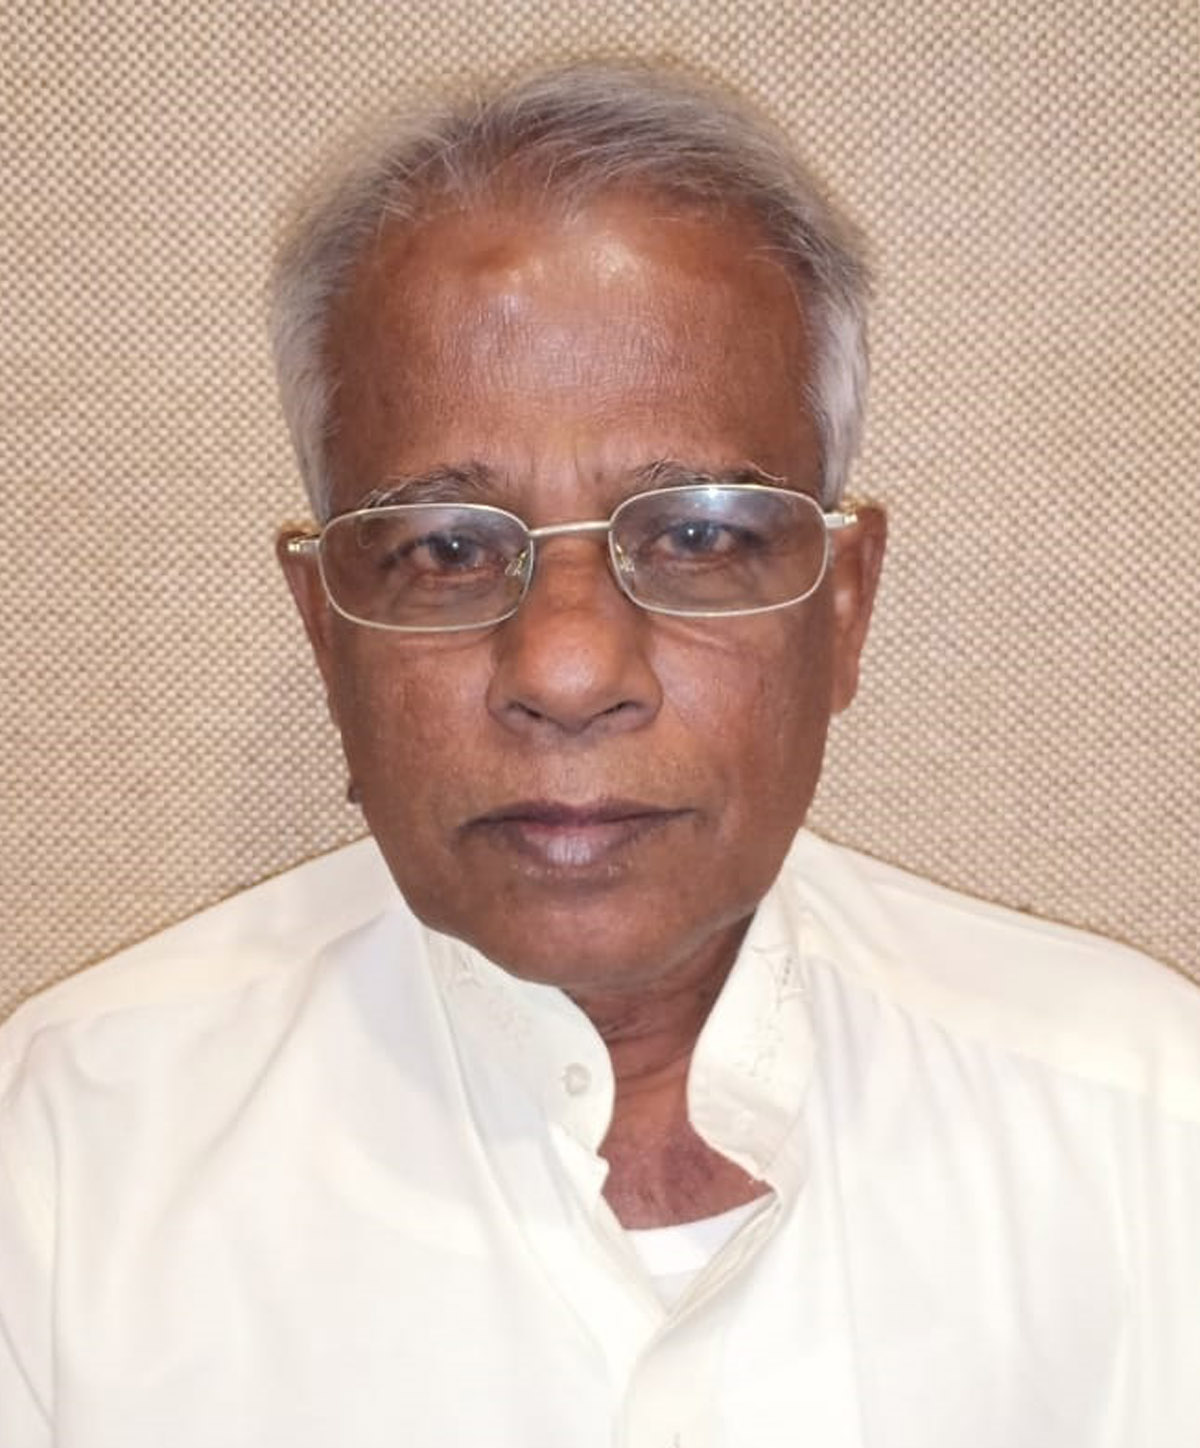 Dr GM Gunapala pannipitiya